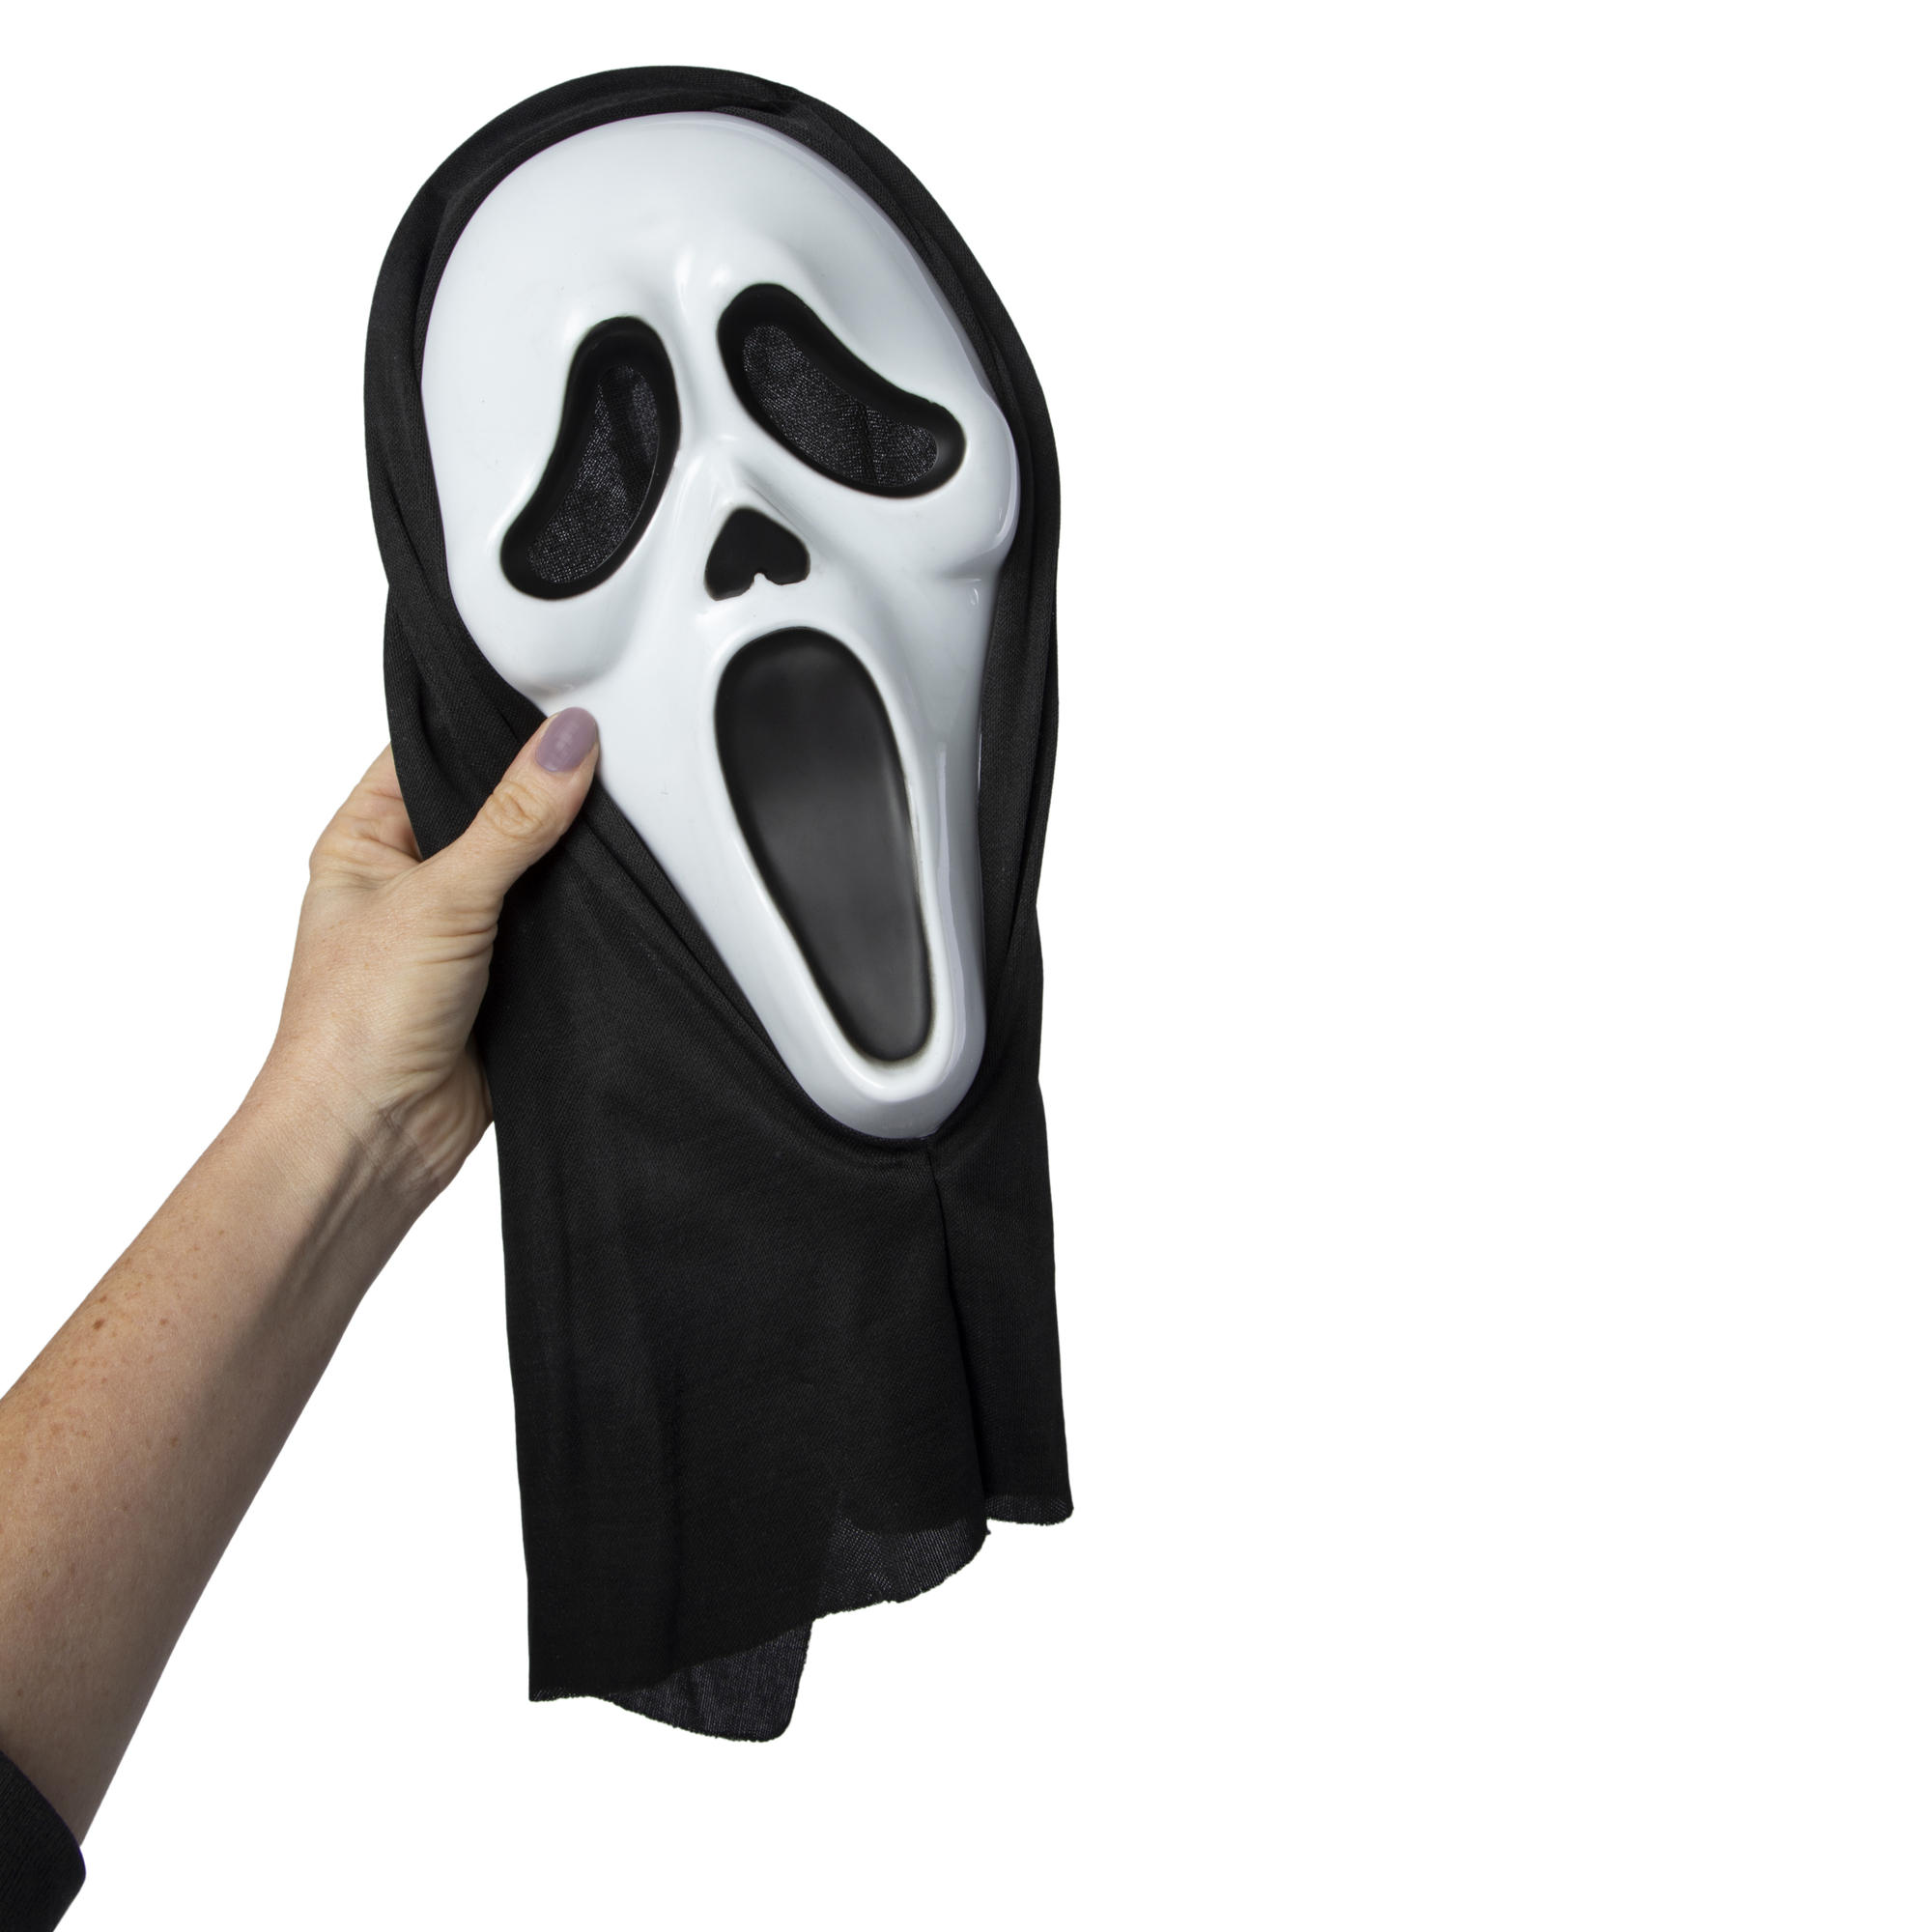 ghost face mask & knife costume set